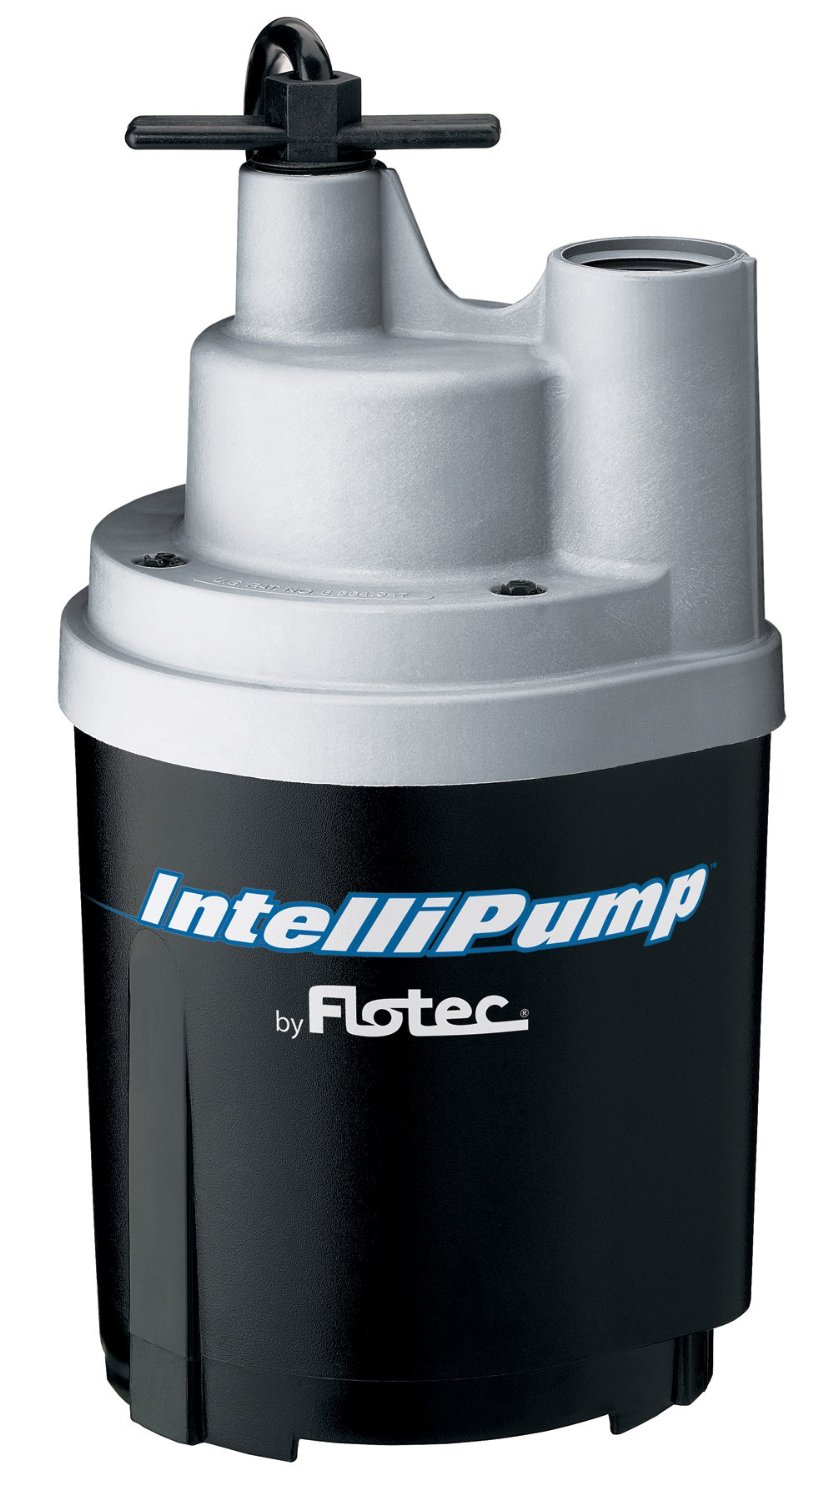 Flotec Intellipump FP0S1775A Intellipump Water Removal Utility Pump, 1/4 HP